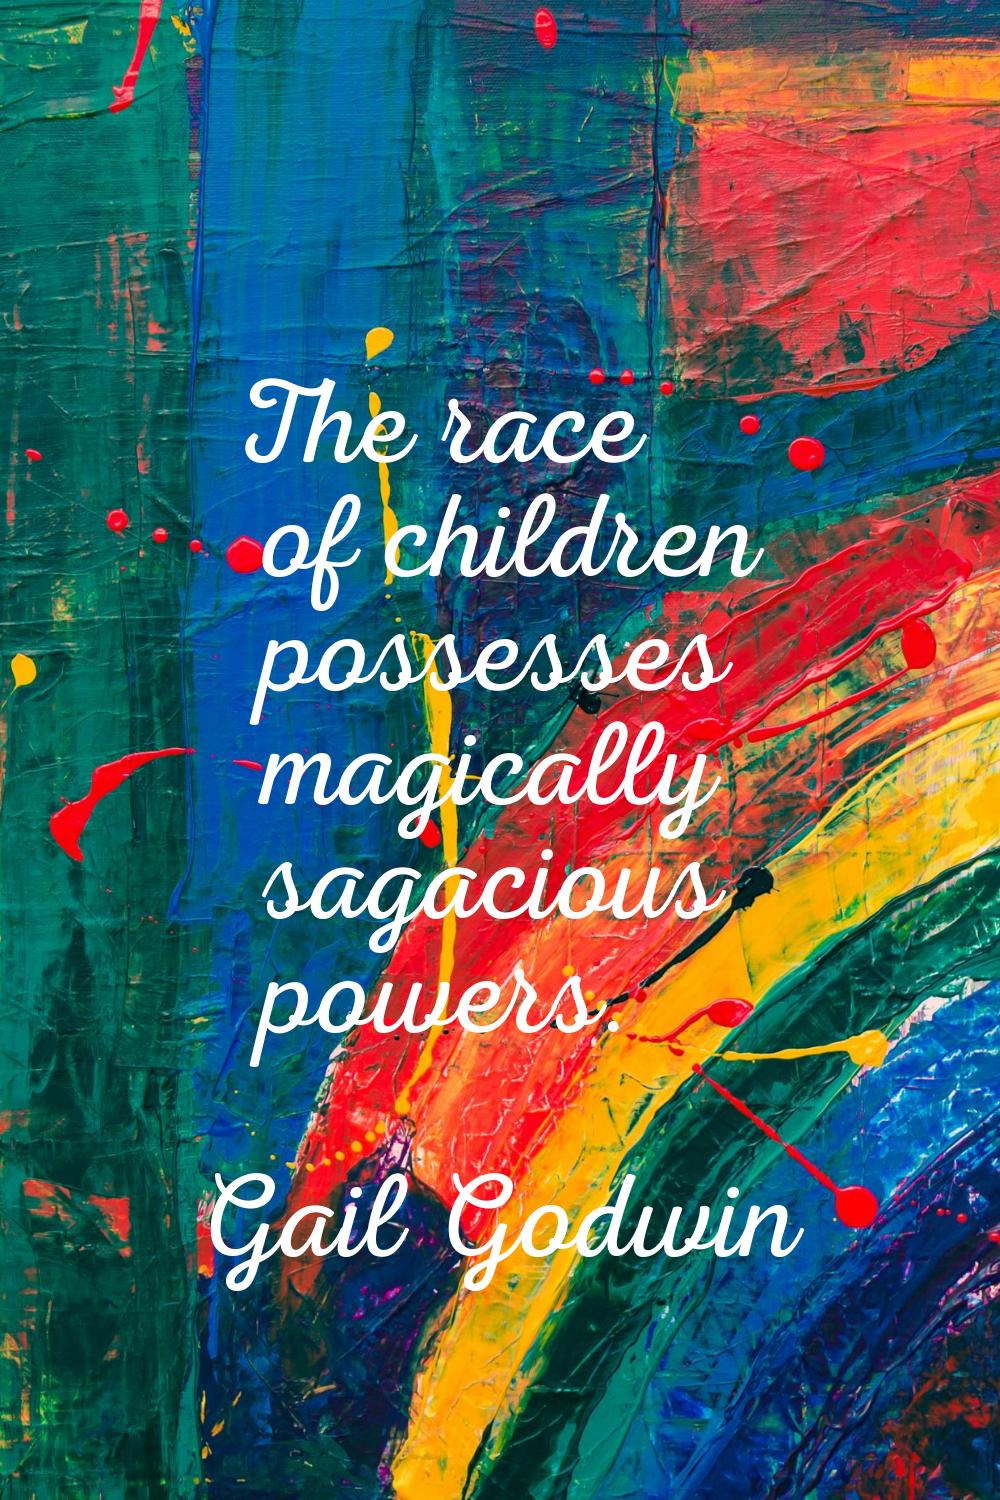 The race of children possesses magically sagacious powers.